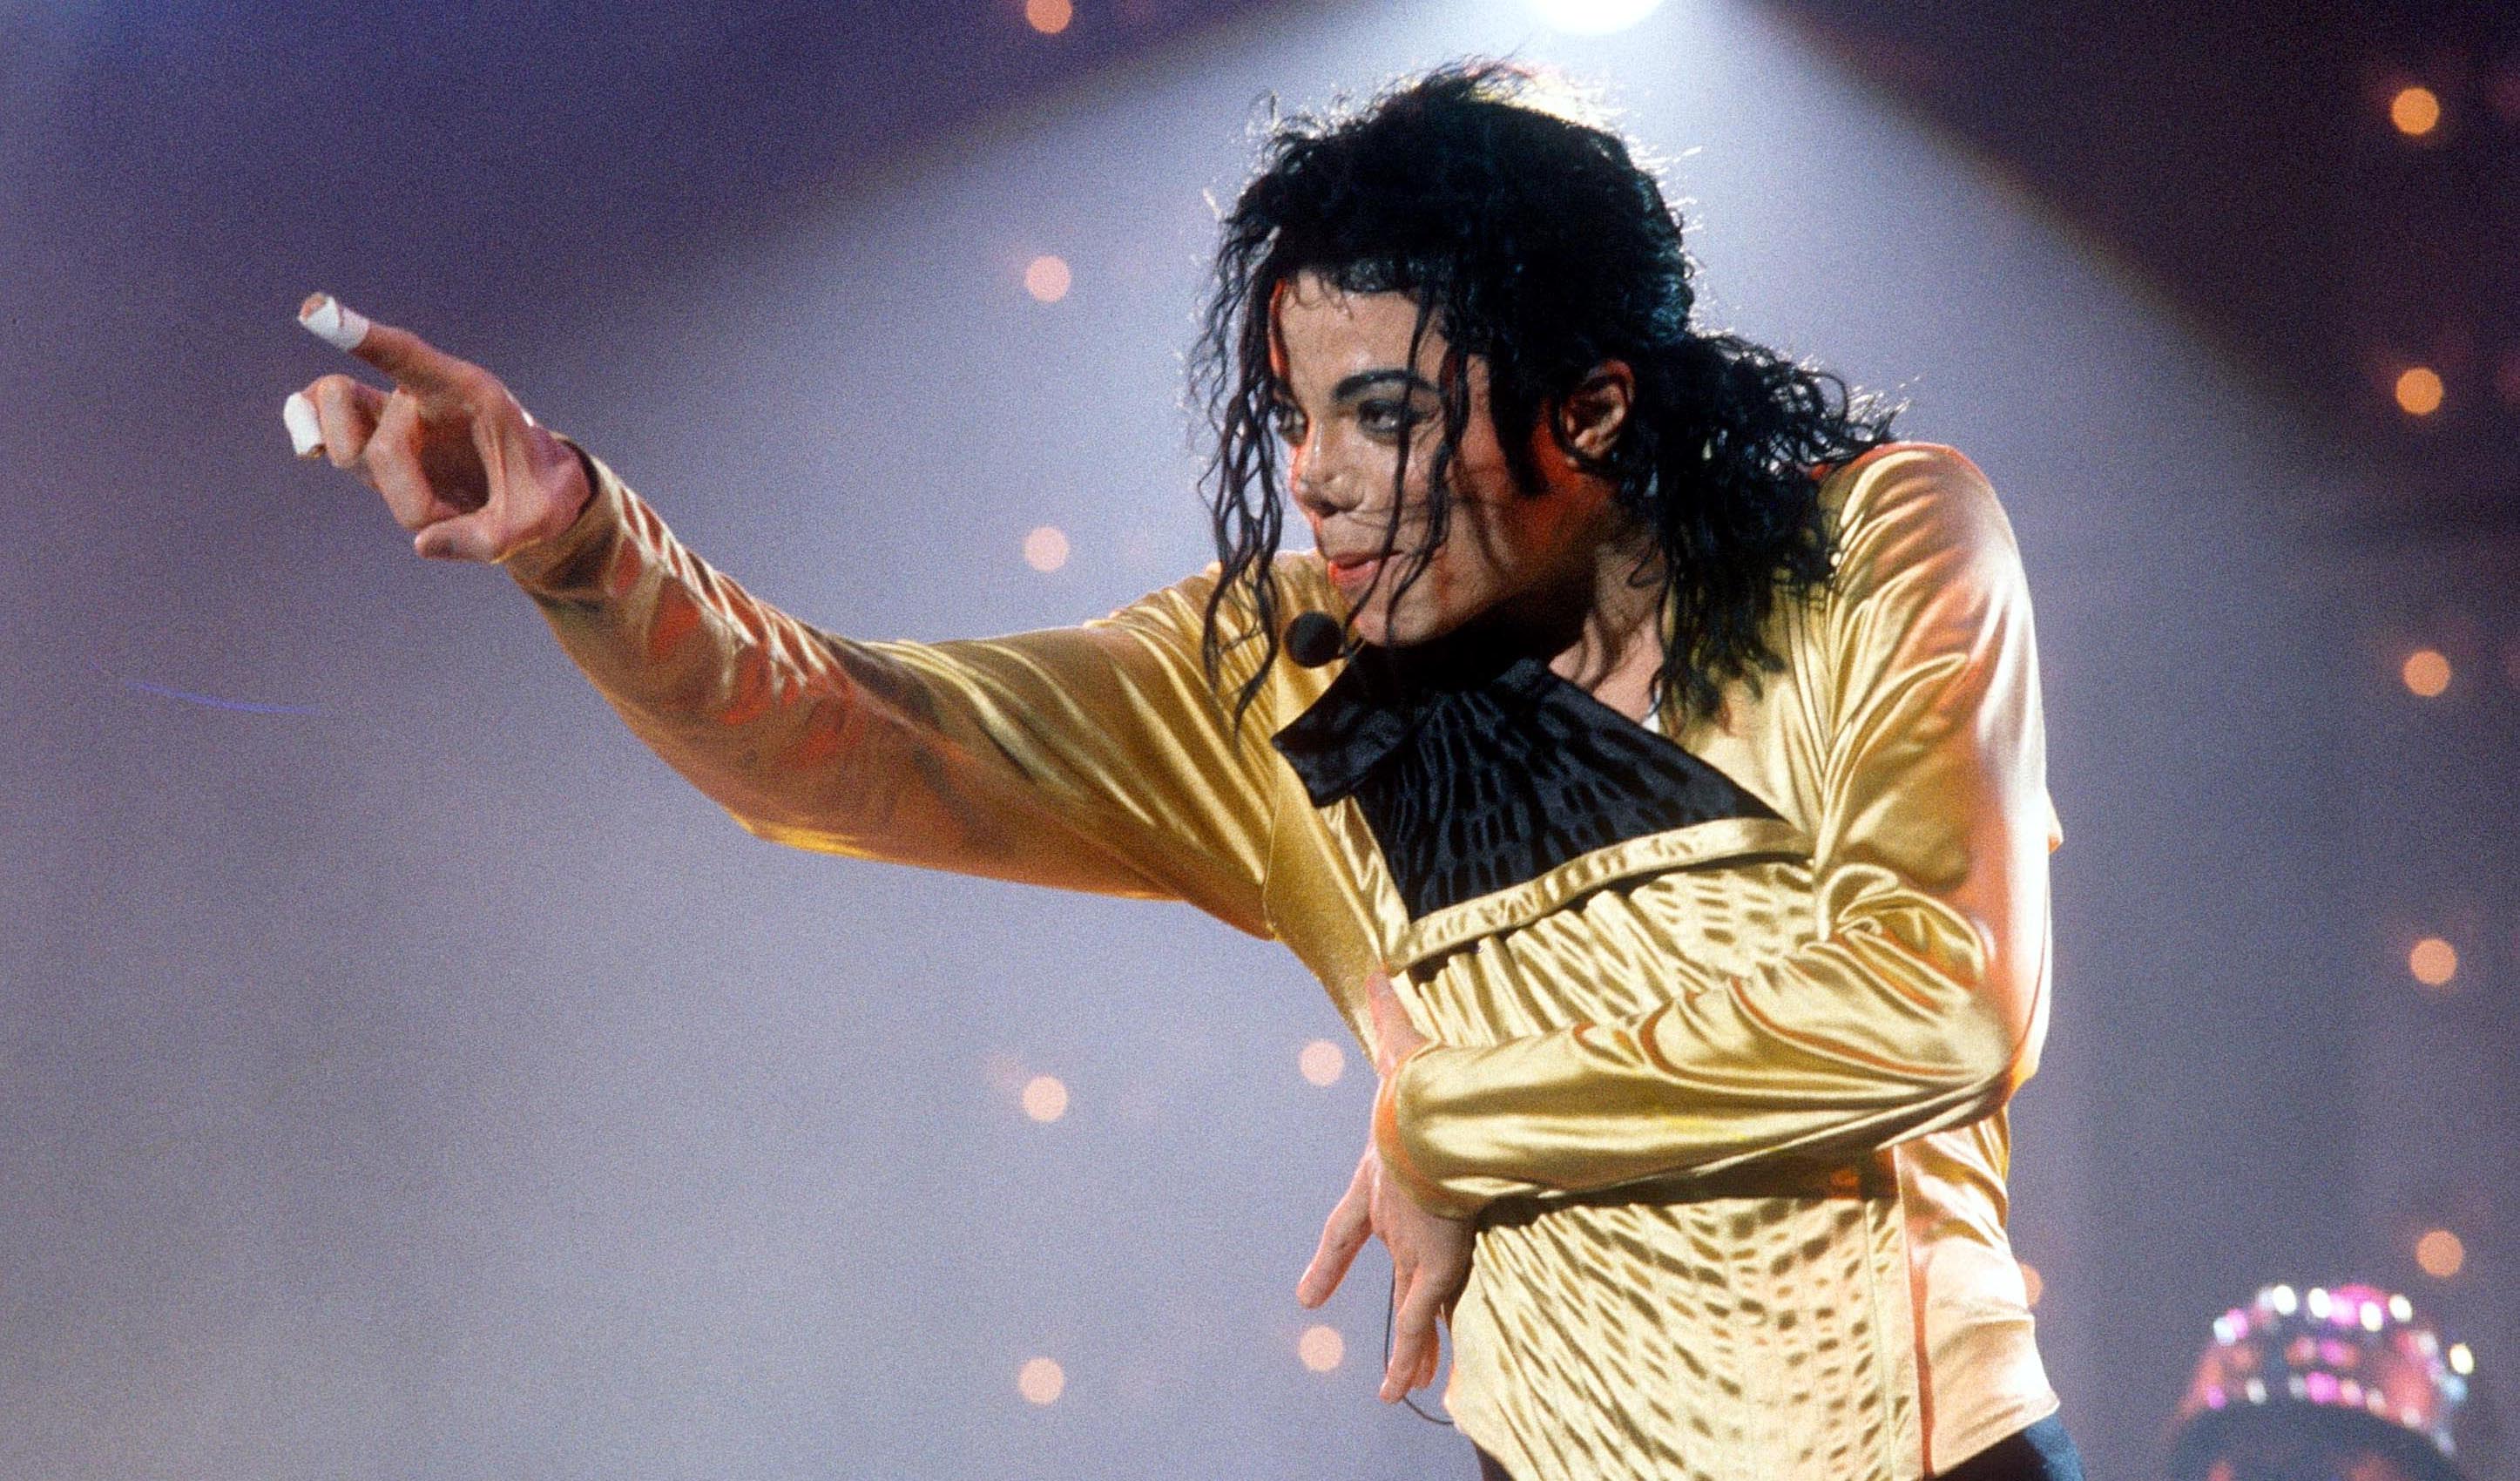 Michael Jackson Photo by Eugene Adebari